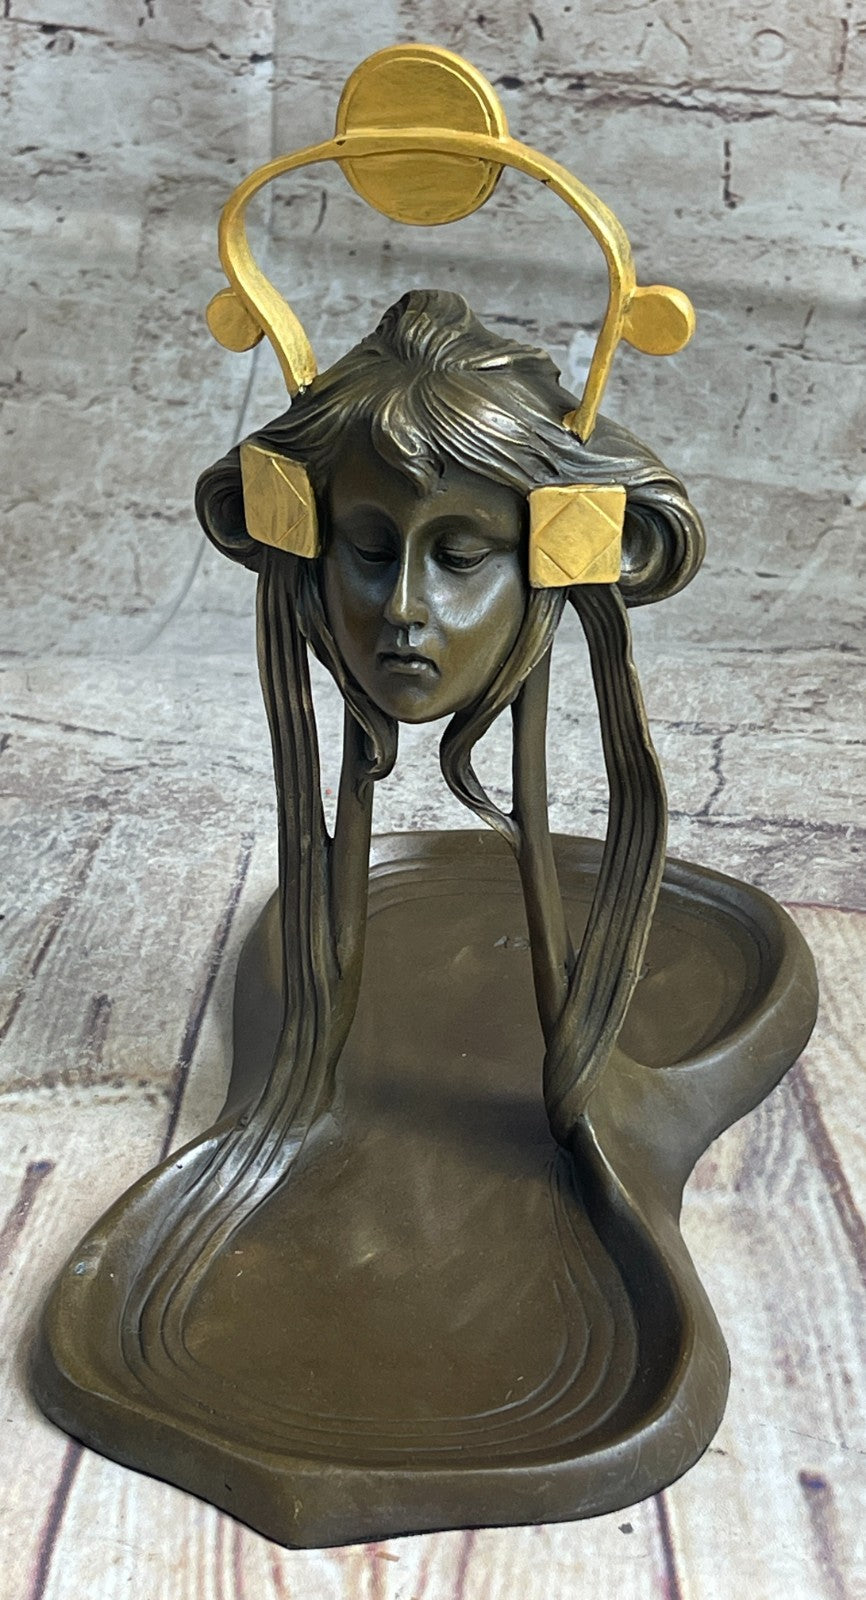 Handcrafted bronze sculpture SALE Wax Lost Figural Dish Candy Nouveau Art